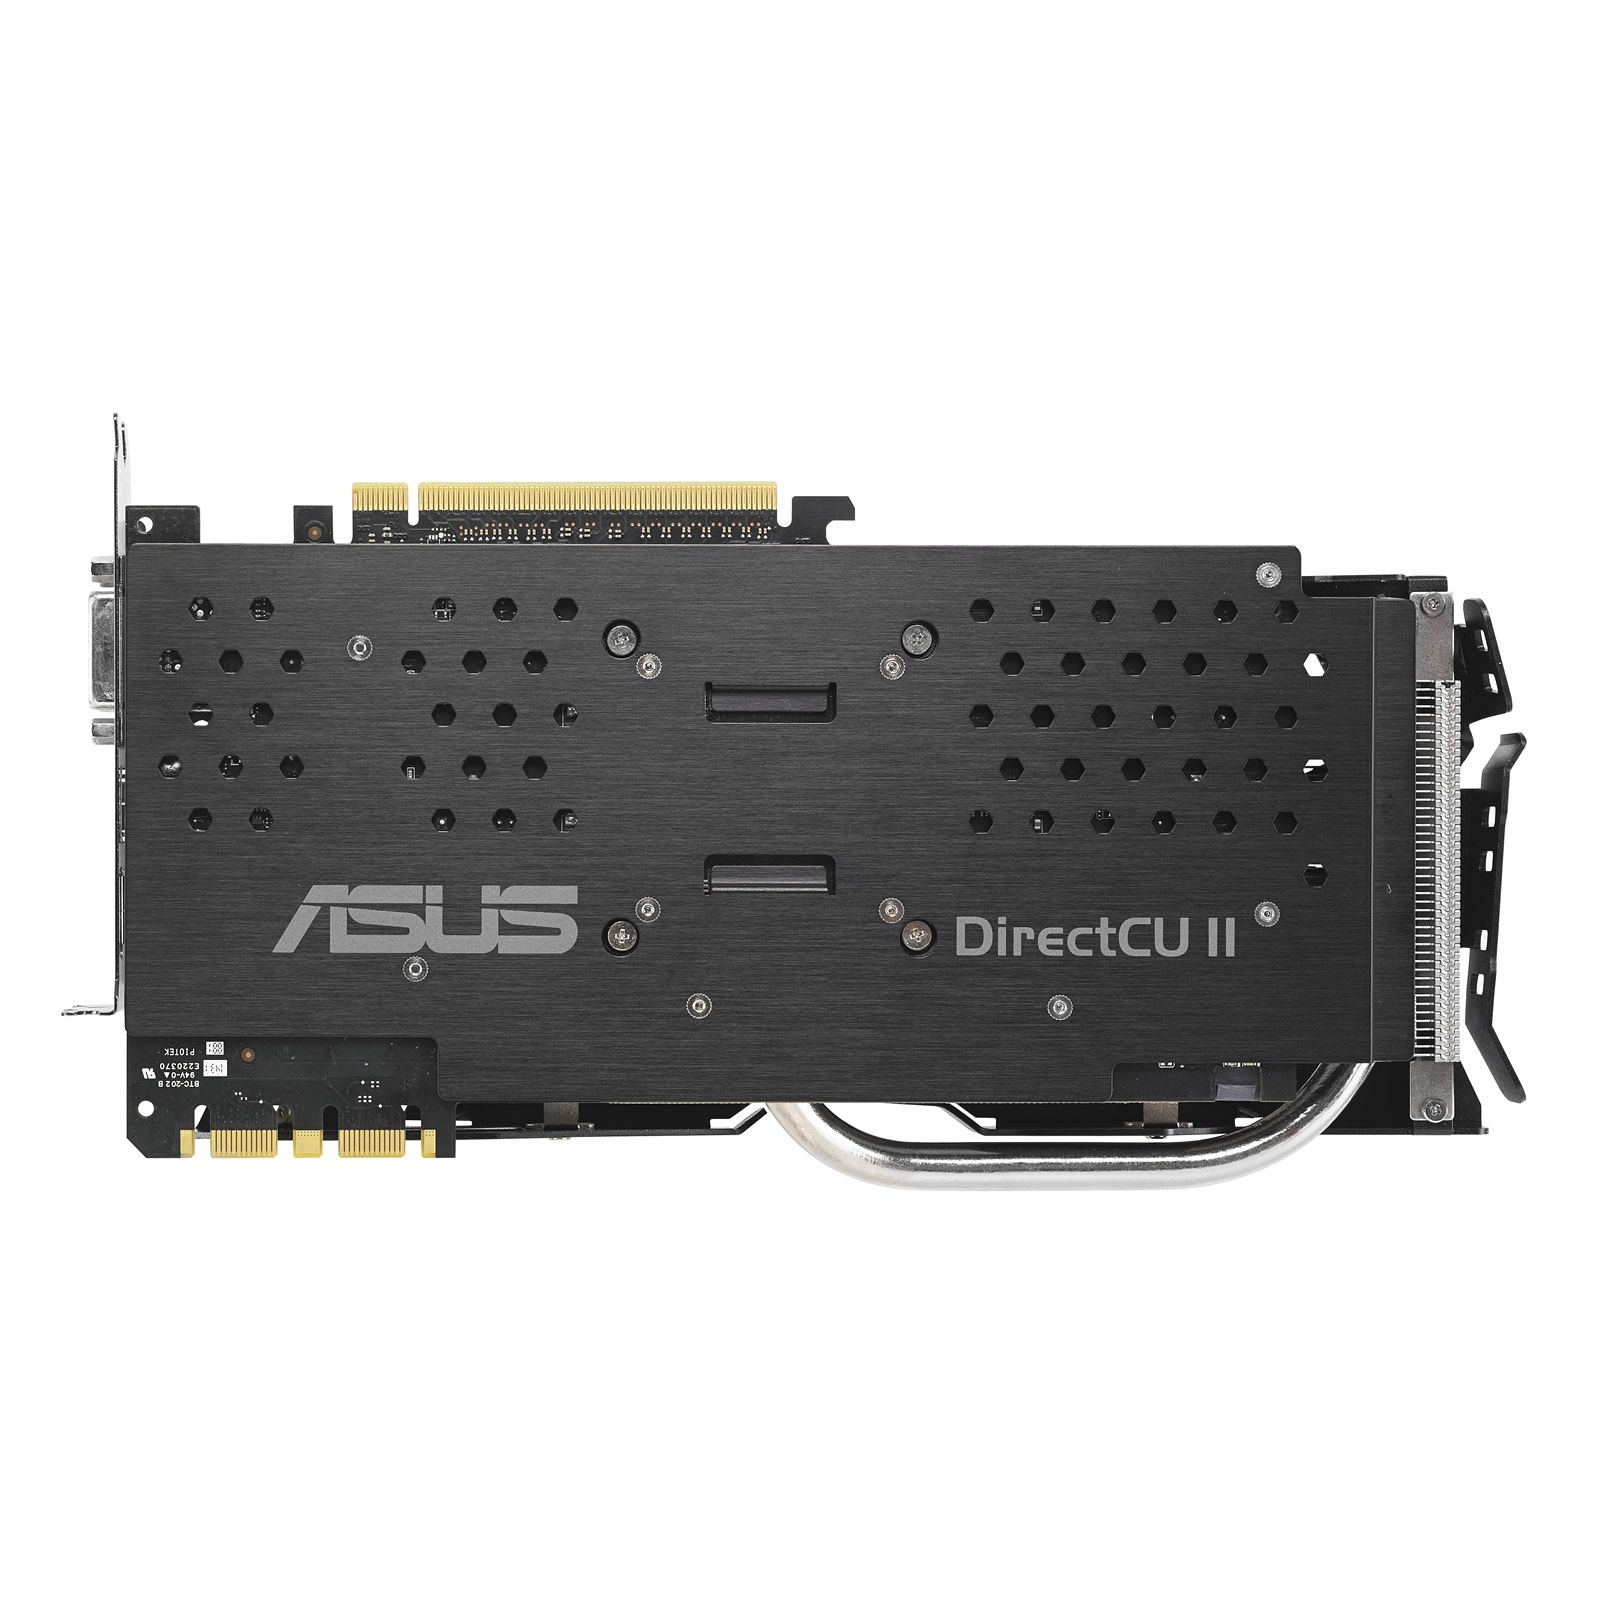 Asus - Asus GeForce GTX 970 DirectCU II OC Strix 4096MB GDDR5 PCI-Express Graphics